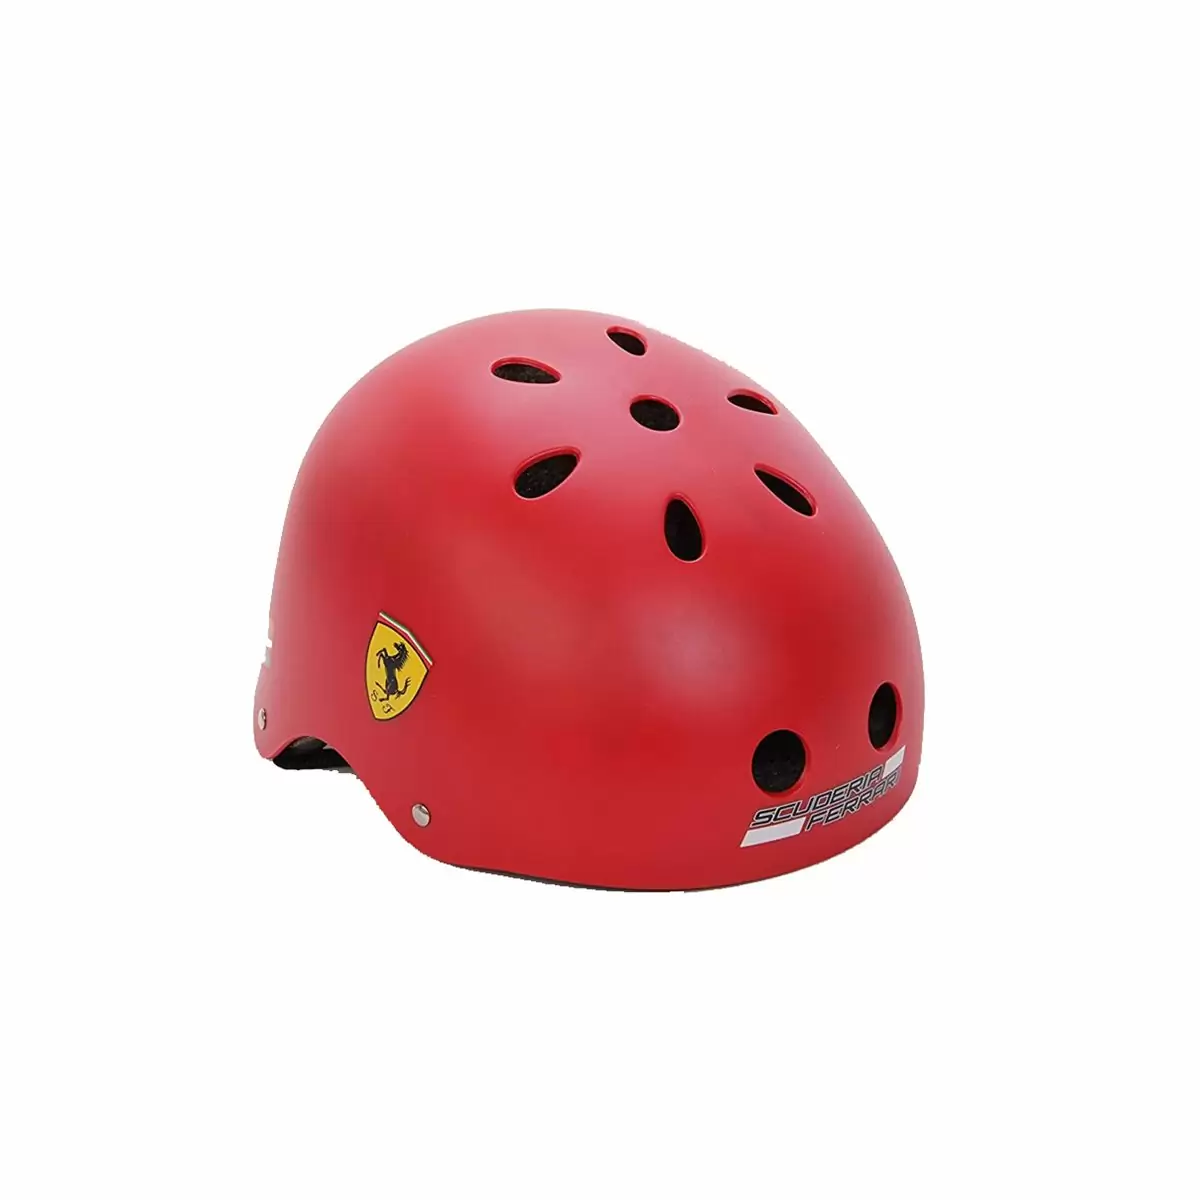 Urban helmet red size M (58-60cm) - image